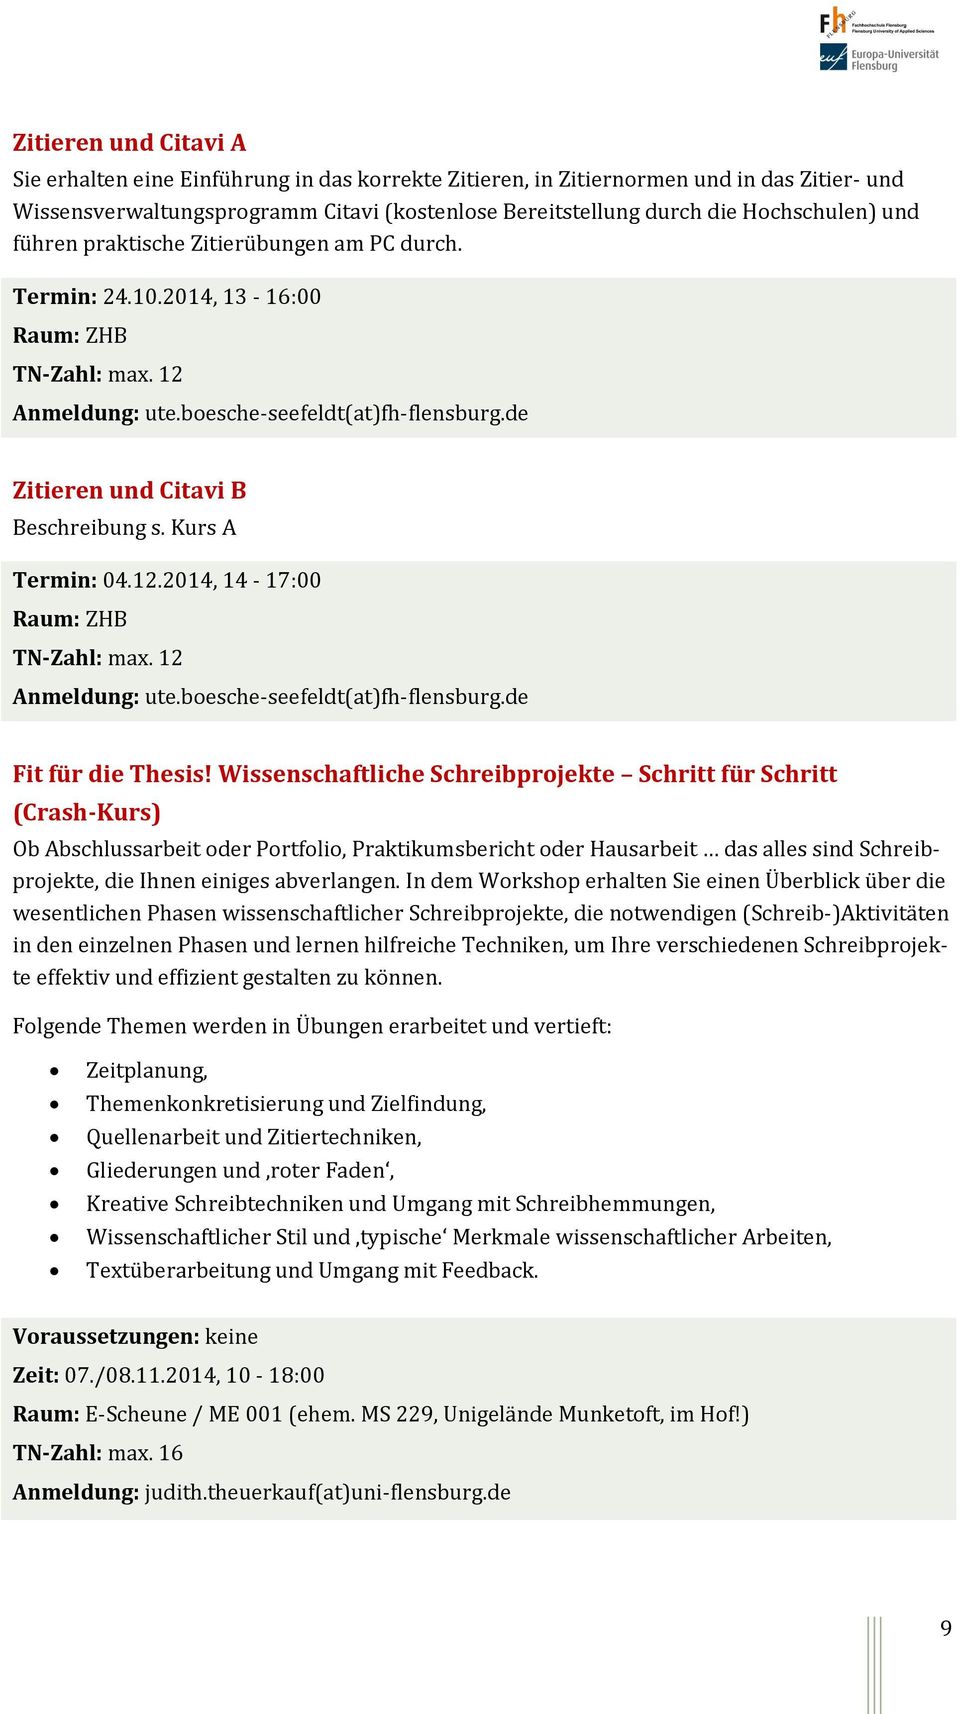 Kurs A Termin: 04.12.2014, 14-17:00 Raum: ZHB TN-Zahl: max. 12 Anmeldung: ute.boesche-seefeldt(at)fh-flensburg.de Fit für die Thesis!